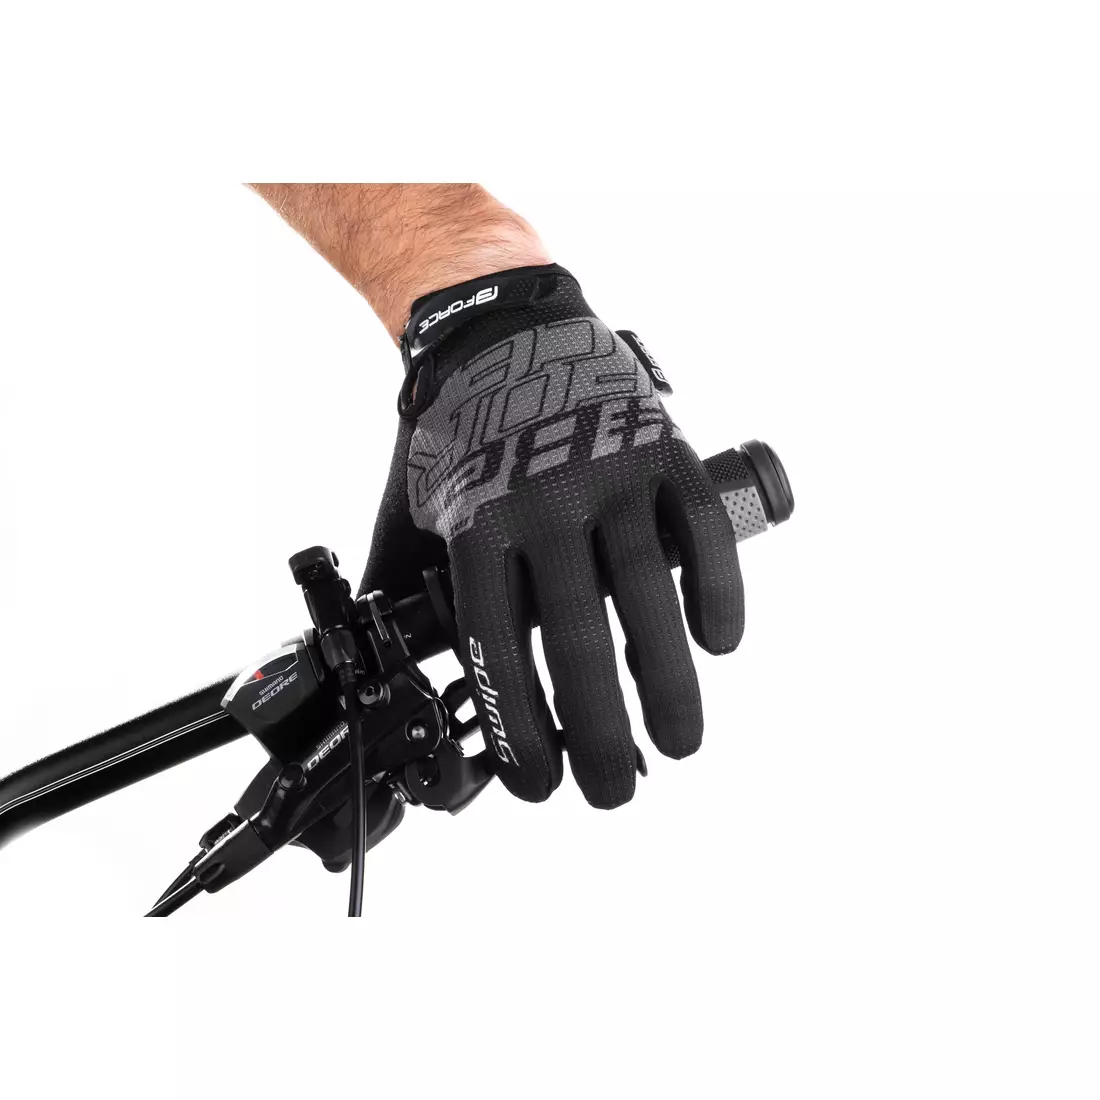 FORCE unisex cycling gloves MTB SWIPE black/grey 905725-S